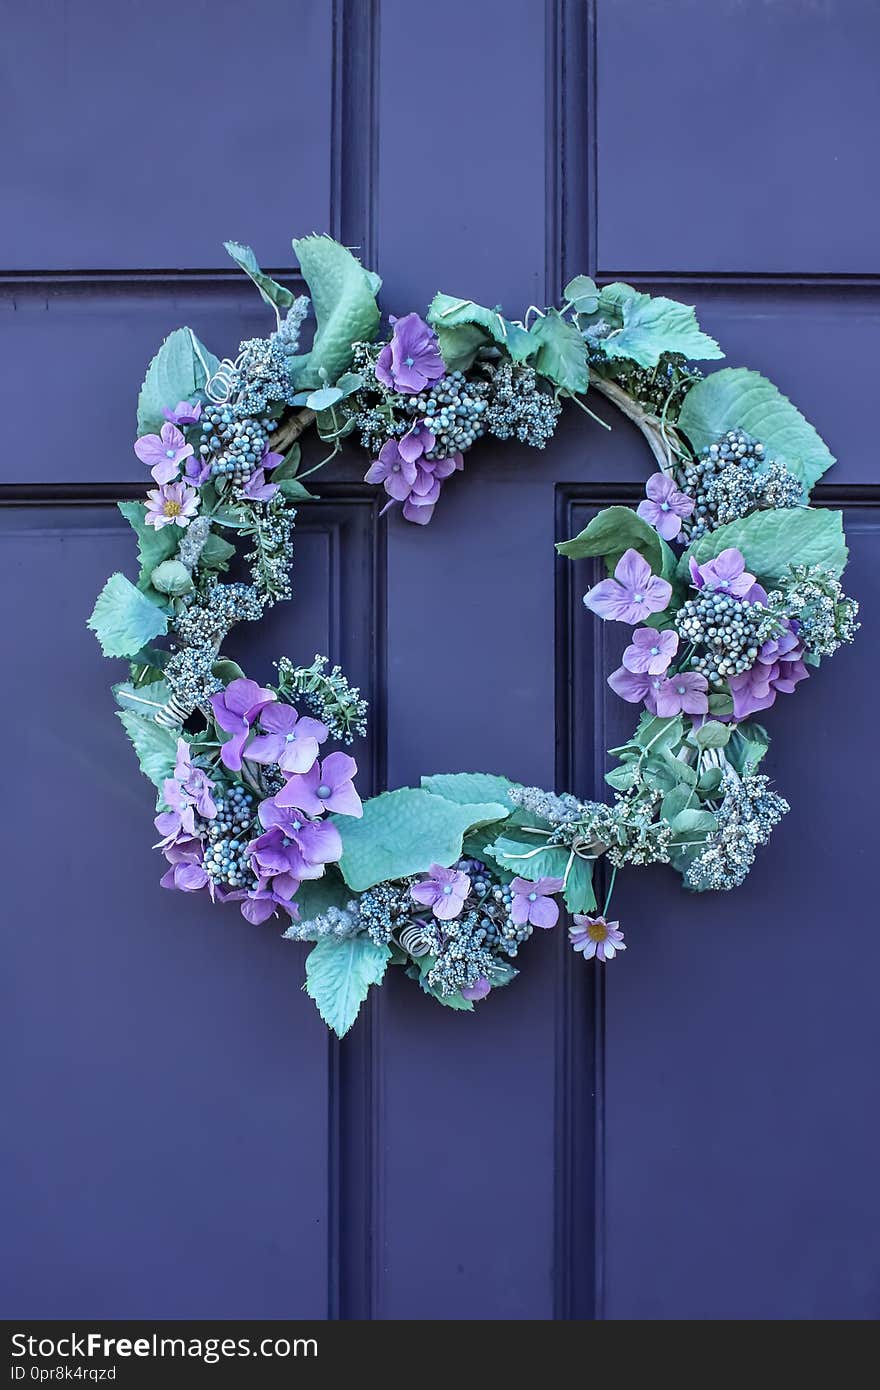 Close-up of beautiful green and purple wreath on deep purple wooden door.